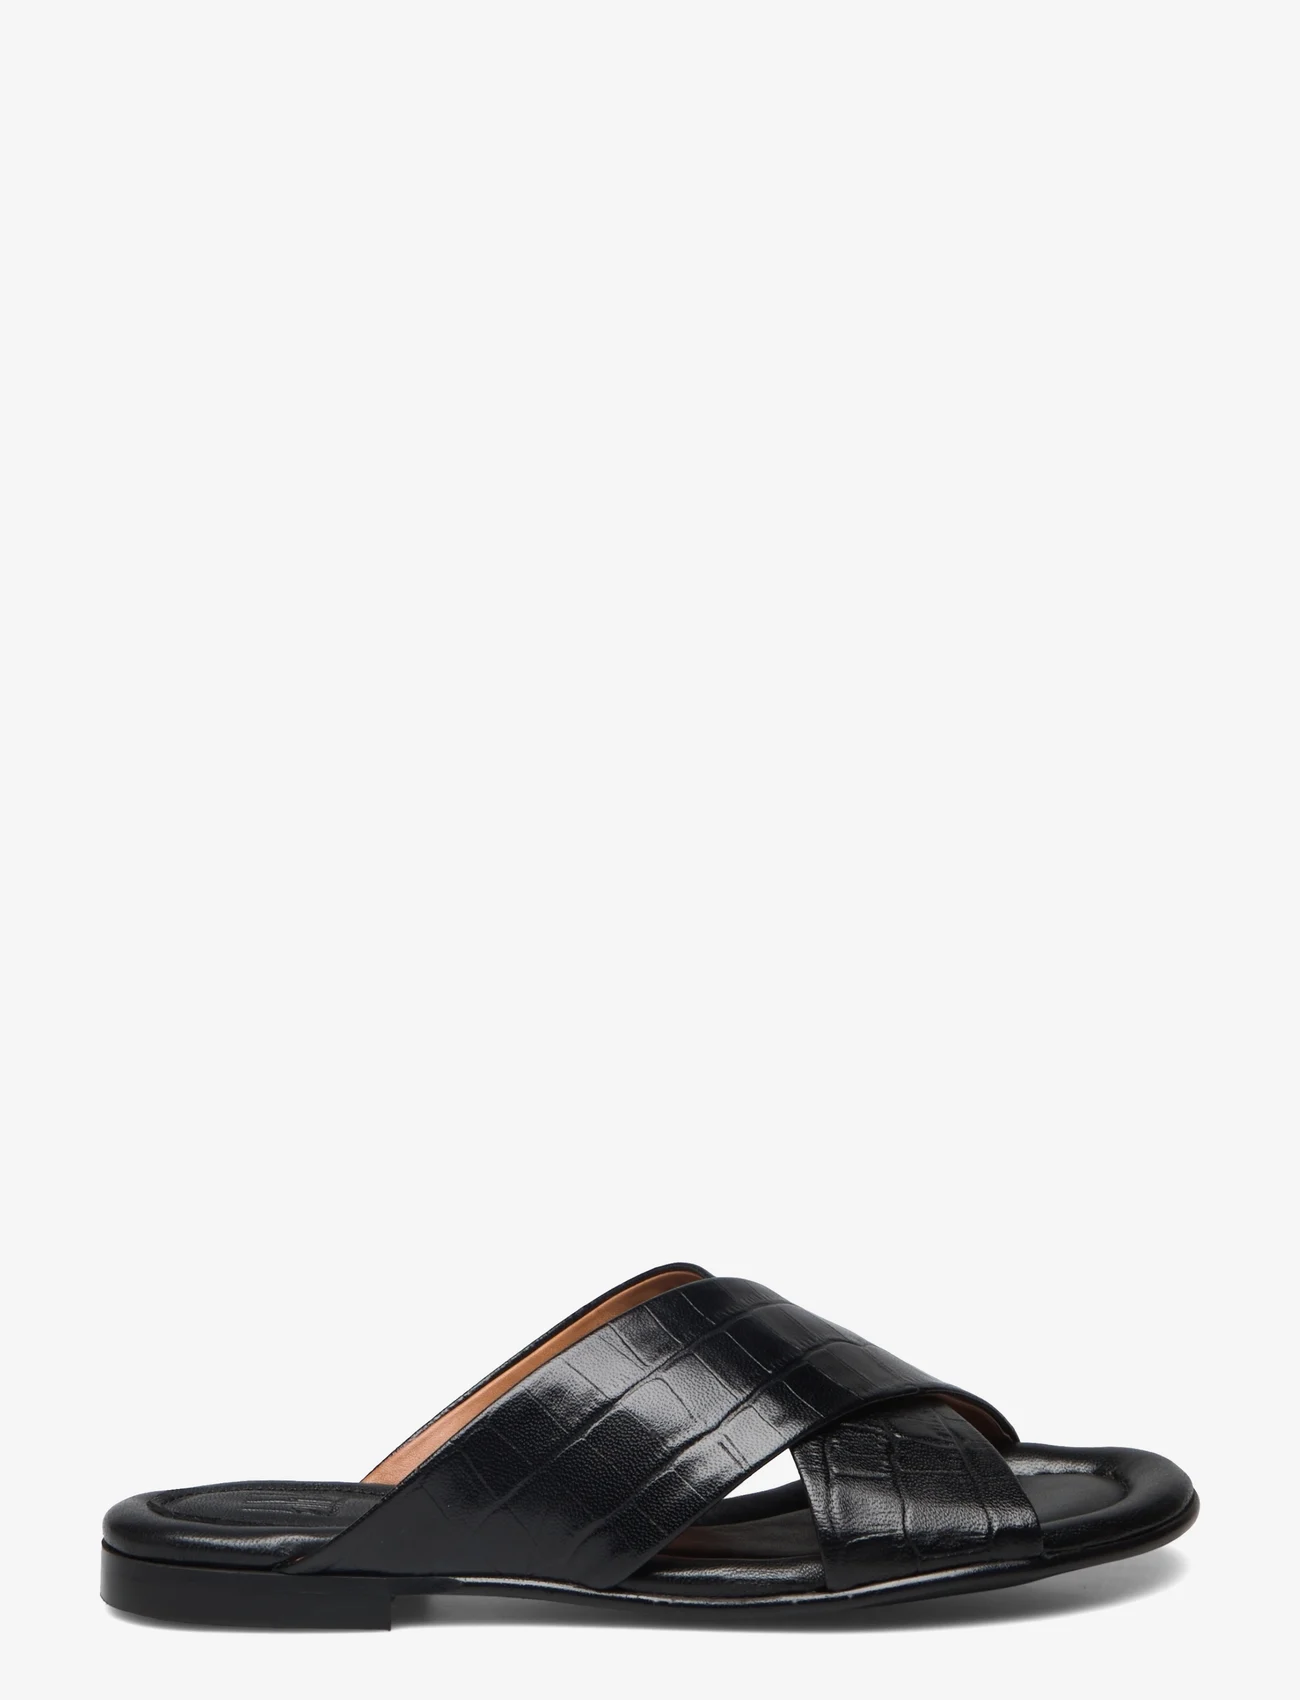 Billi Bi - Sandals - flade sandaler - black croco 20 - 1